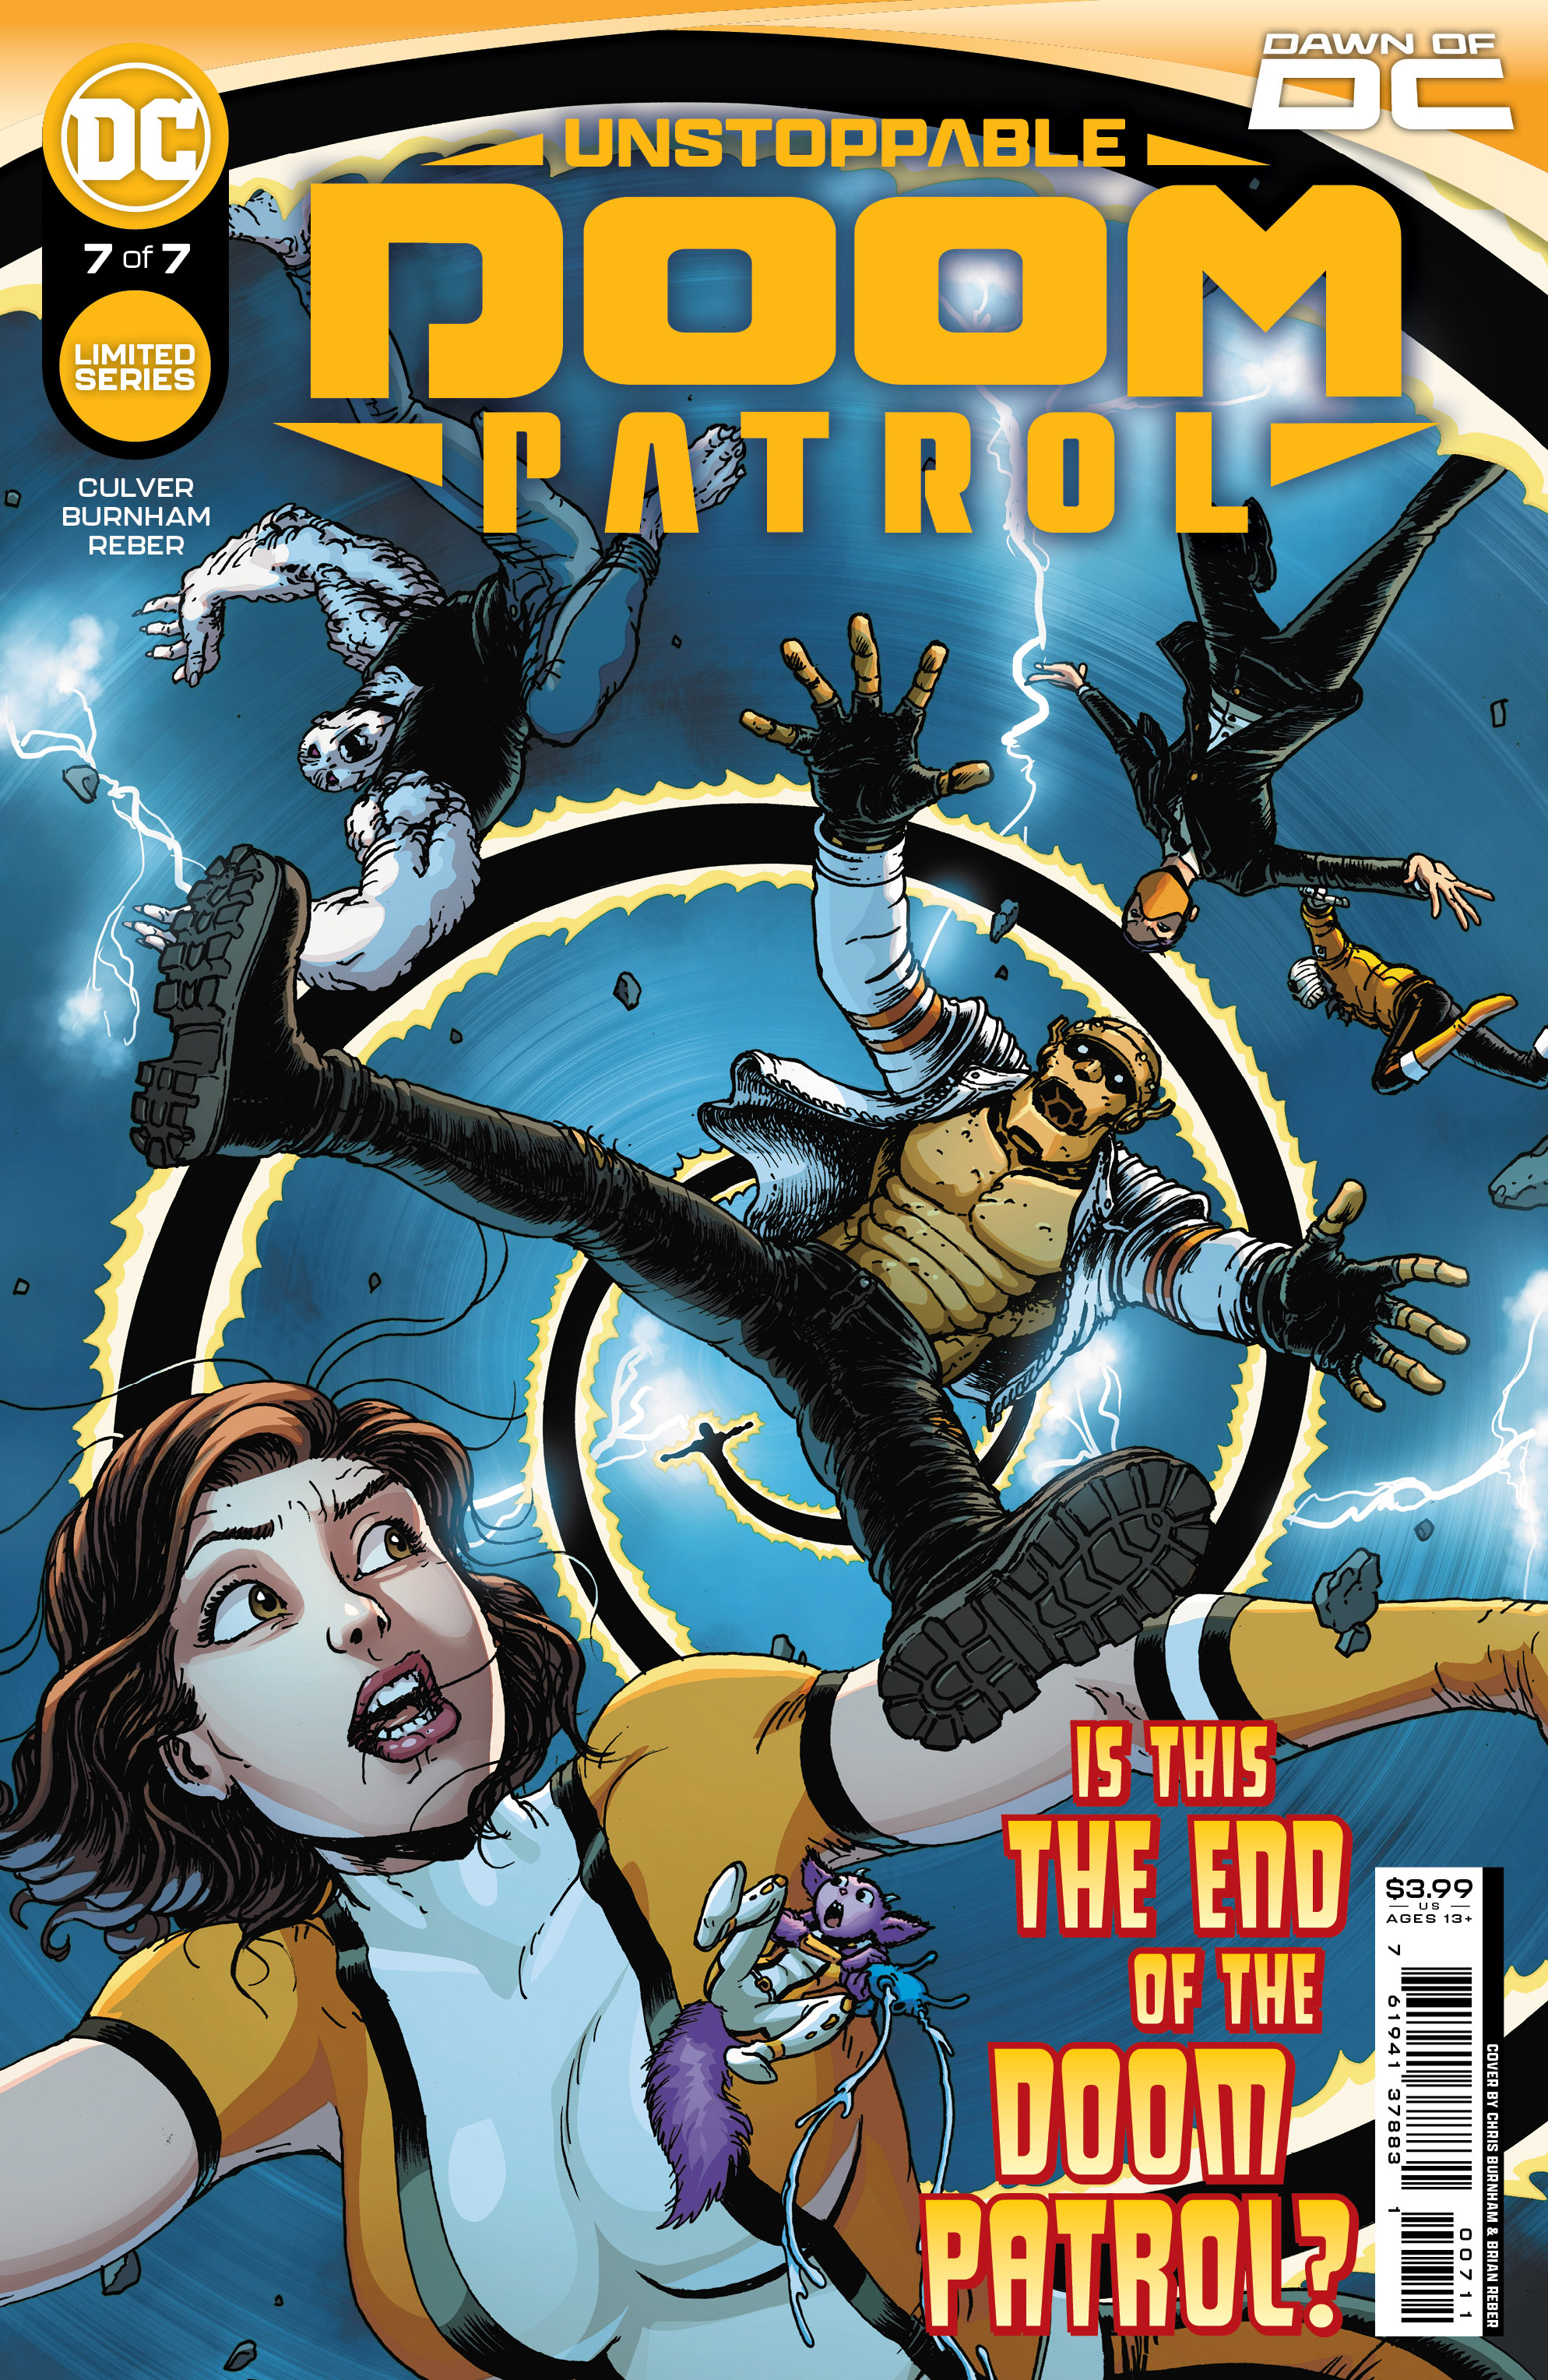 Unstoppable Doom Patrol #7 Cover A Chris Burnham (Of 7)